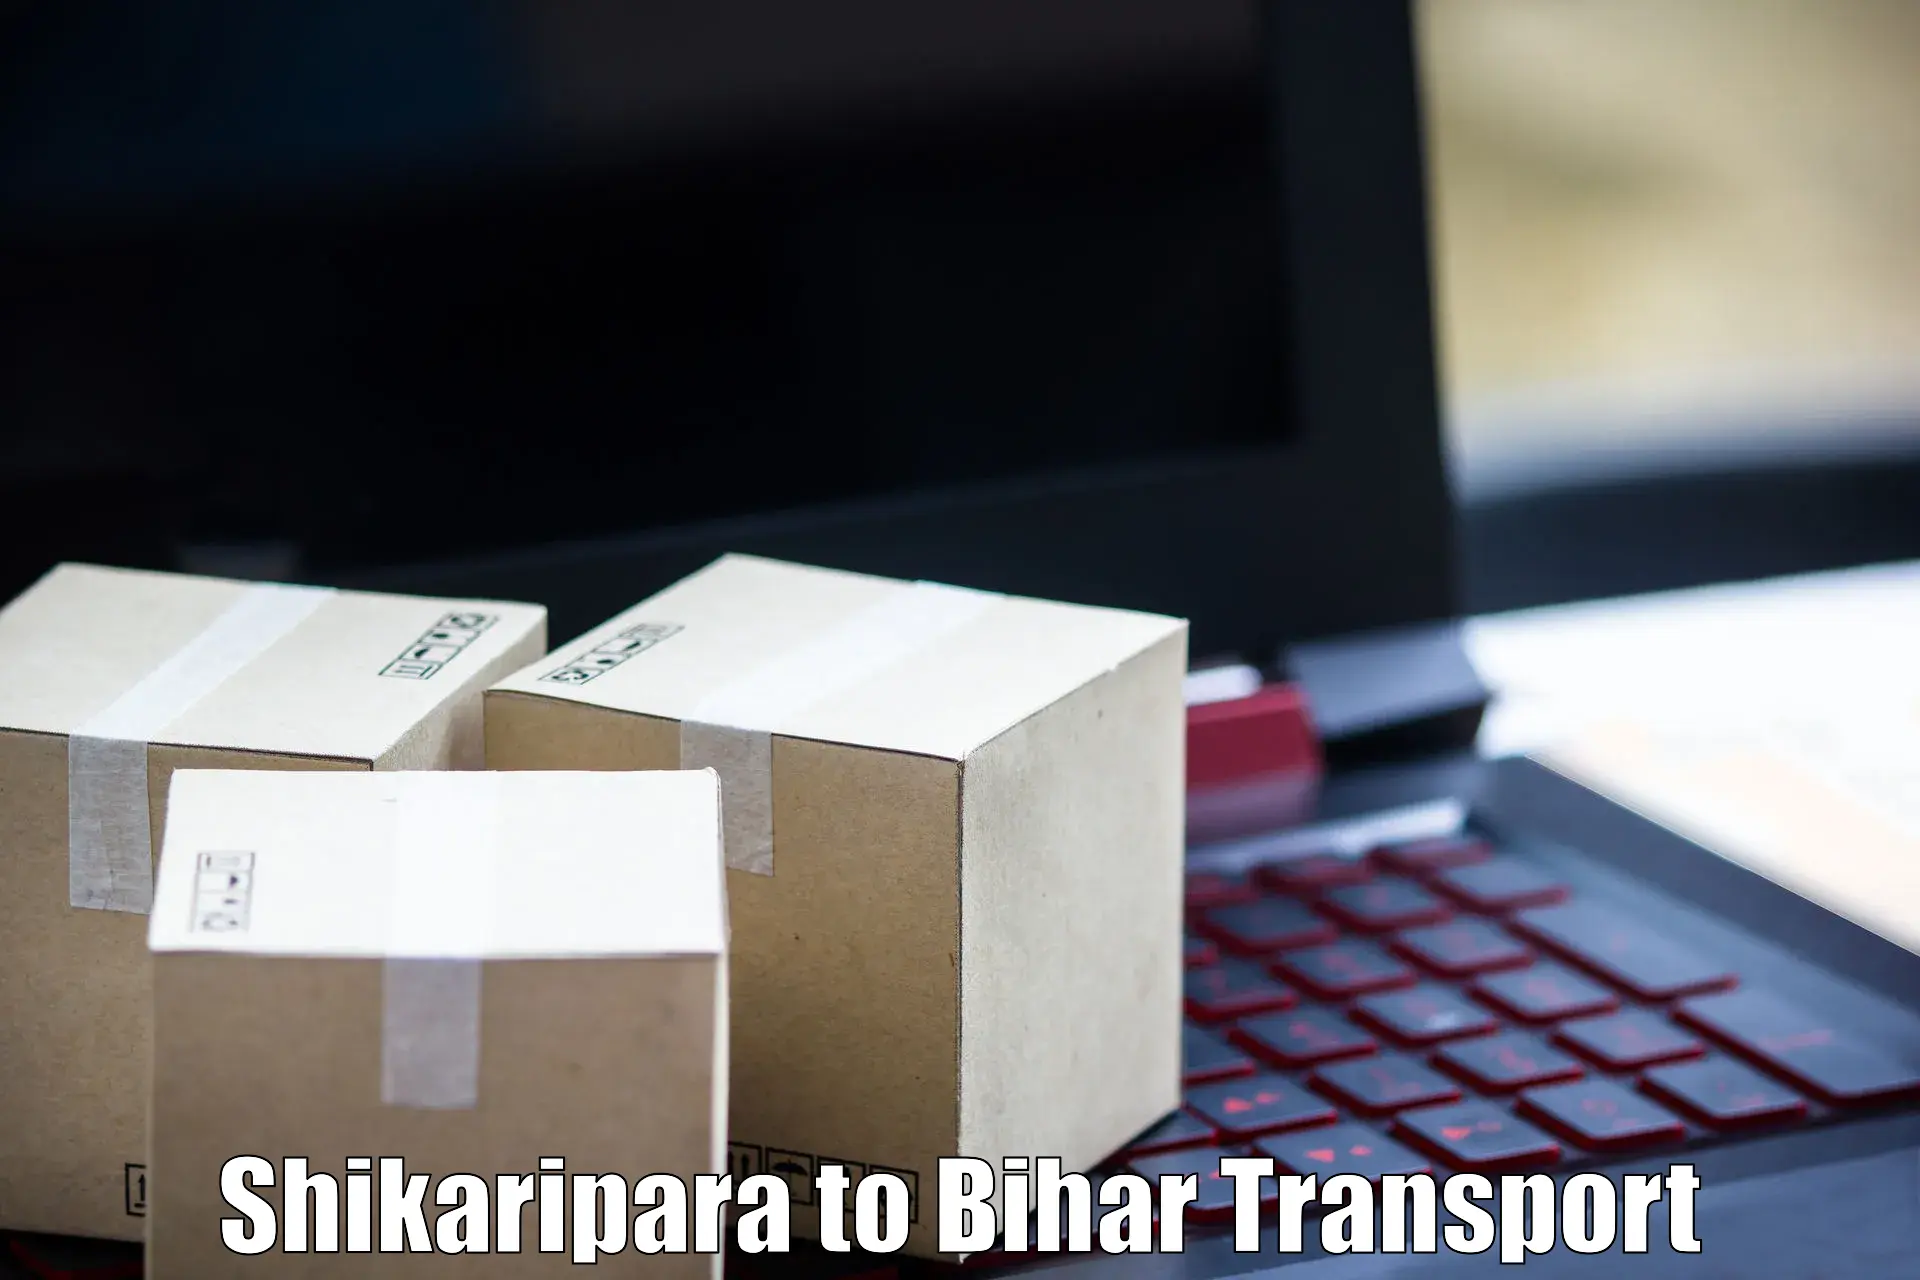 Delivery service Shikaripara to Bihar